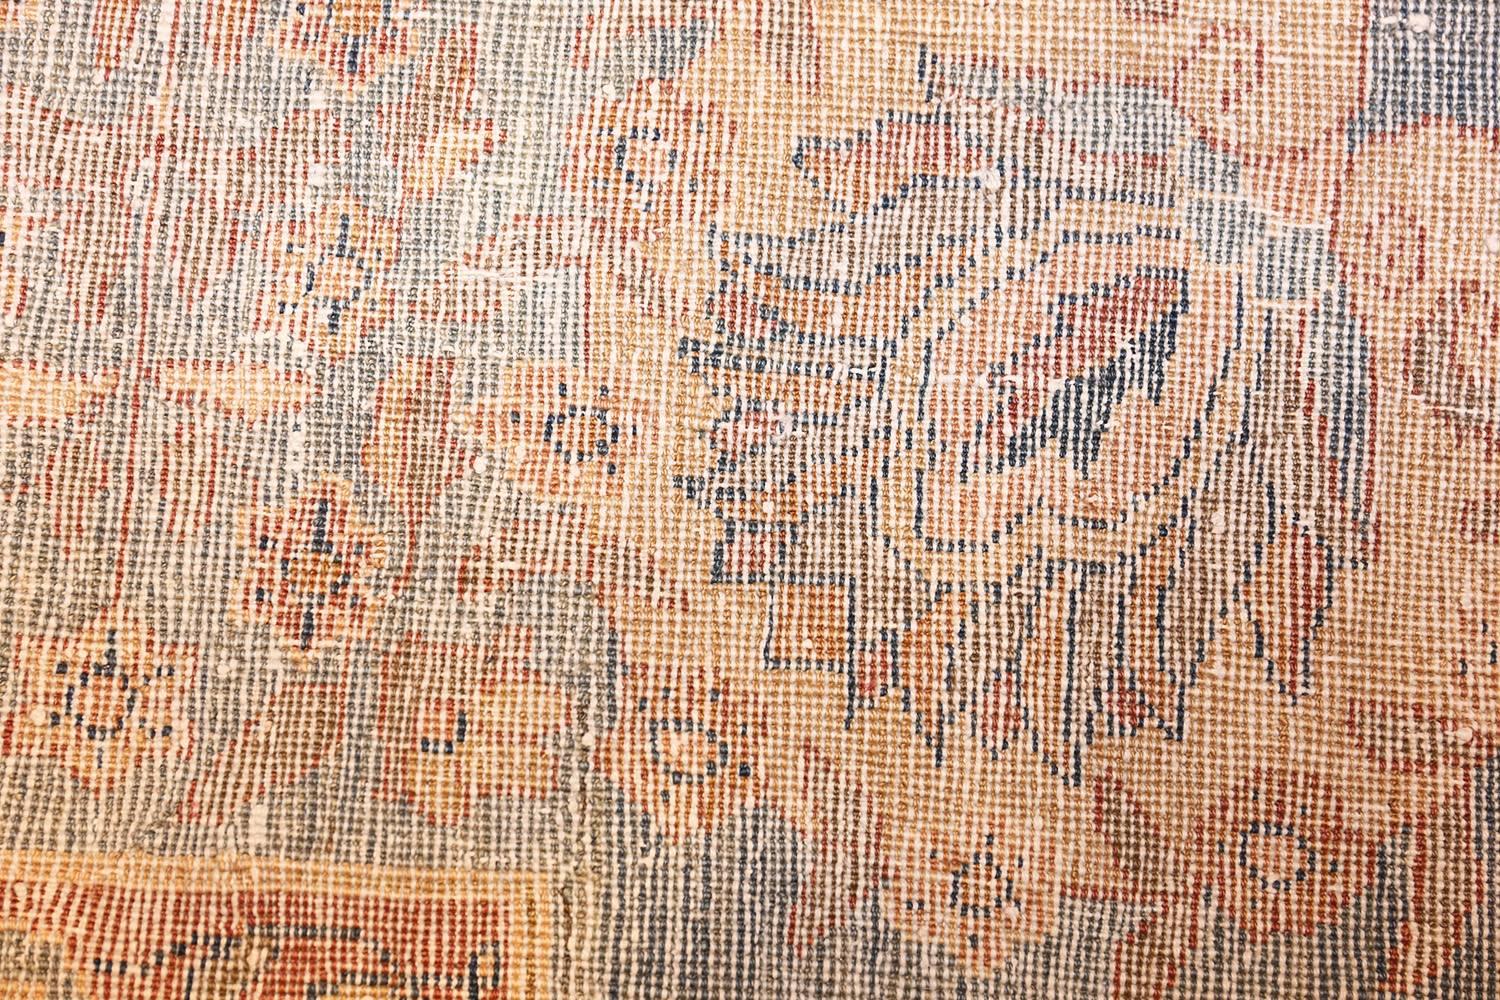 Rare Square Size Decorative Persian Antique Tabriz Rug, Country of Origin: Persia, Circa Date: 1900. Size: 14 ft x 14 ft 6 in (4.27 m x 4.42 m).